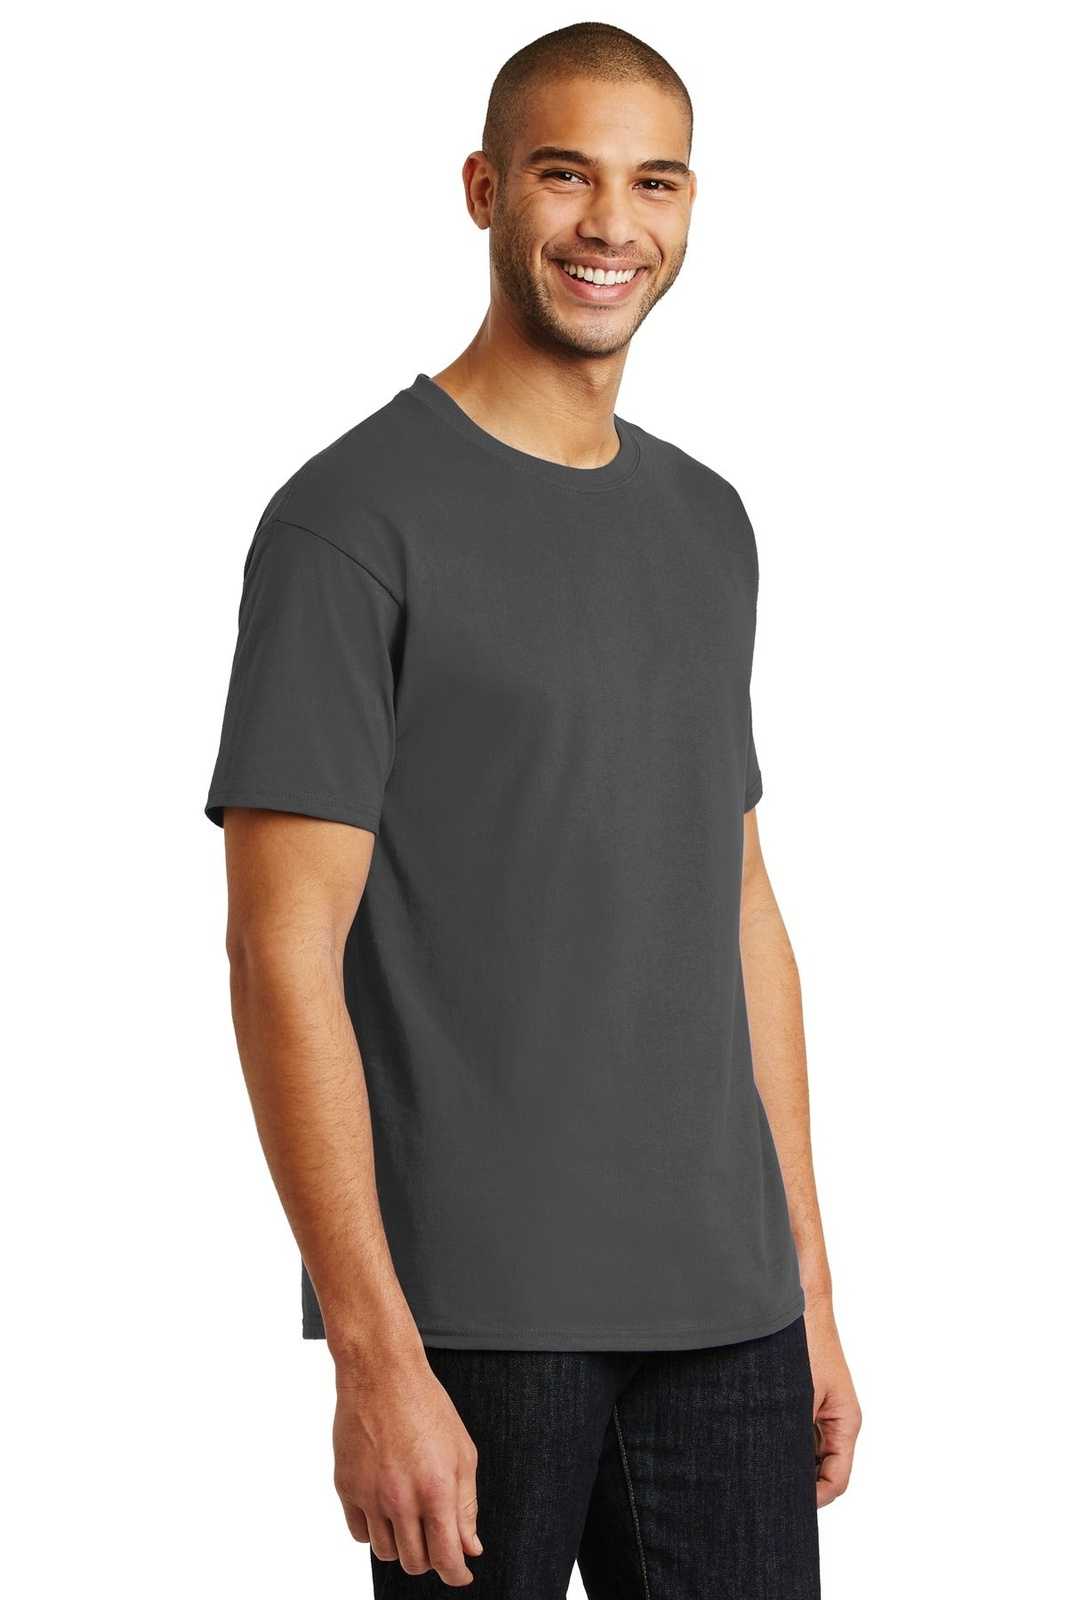 Hanes 5250 Tagless 100% Cotton T-Shirt - Smoke Gray - HIT a Double